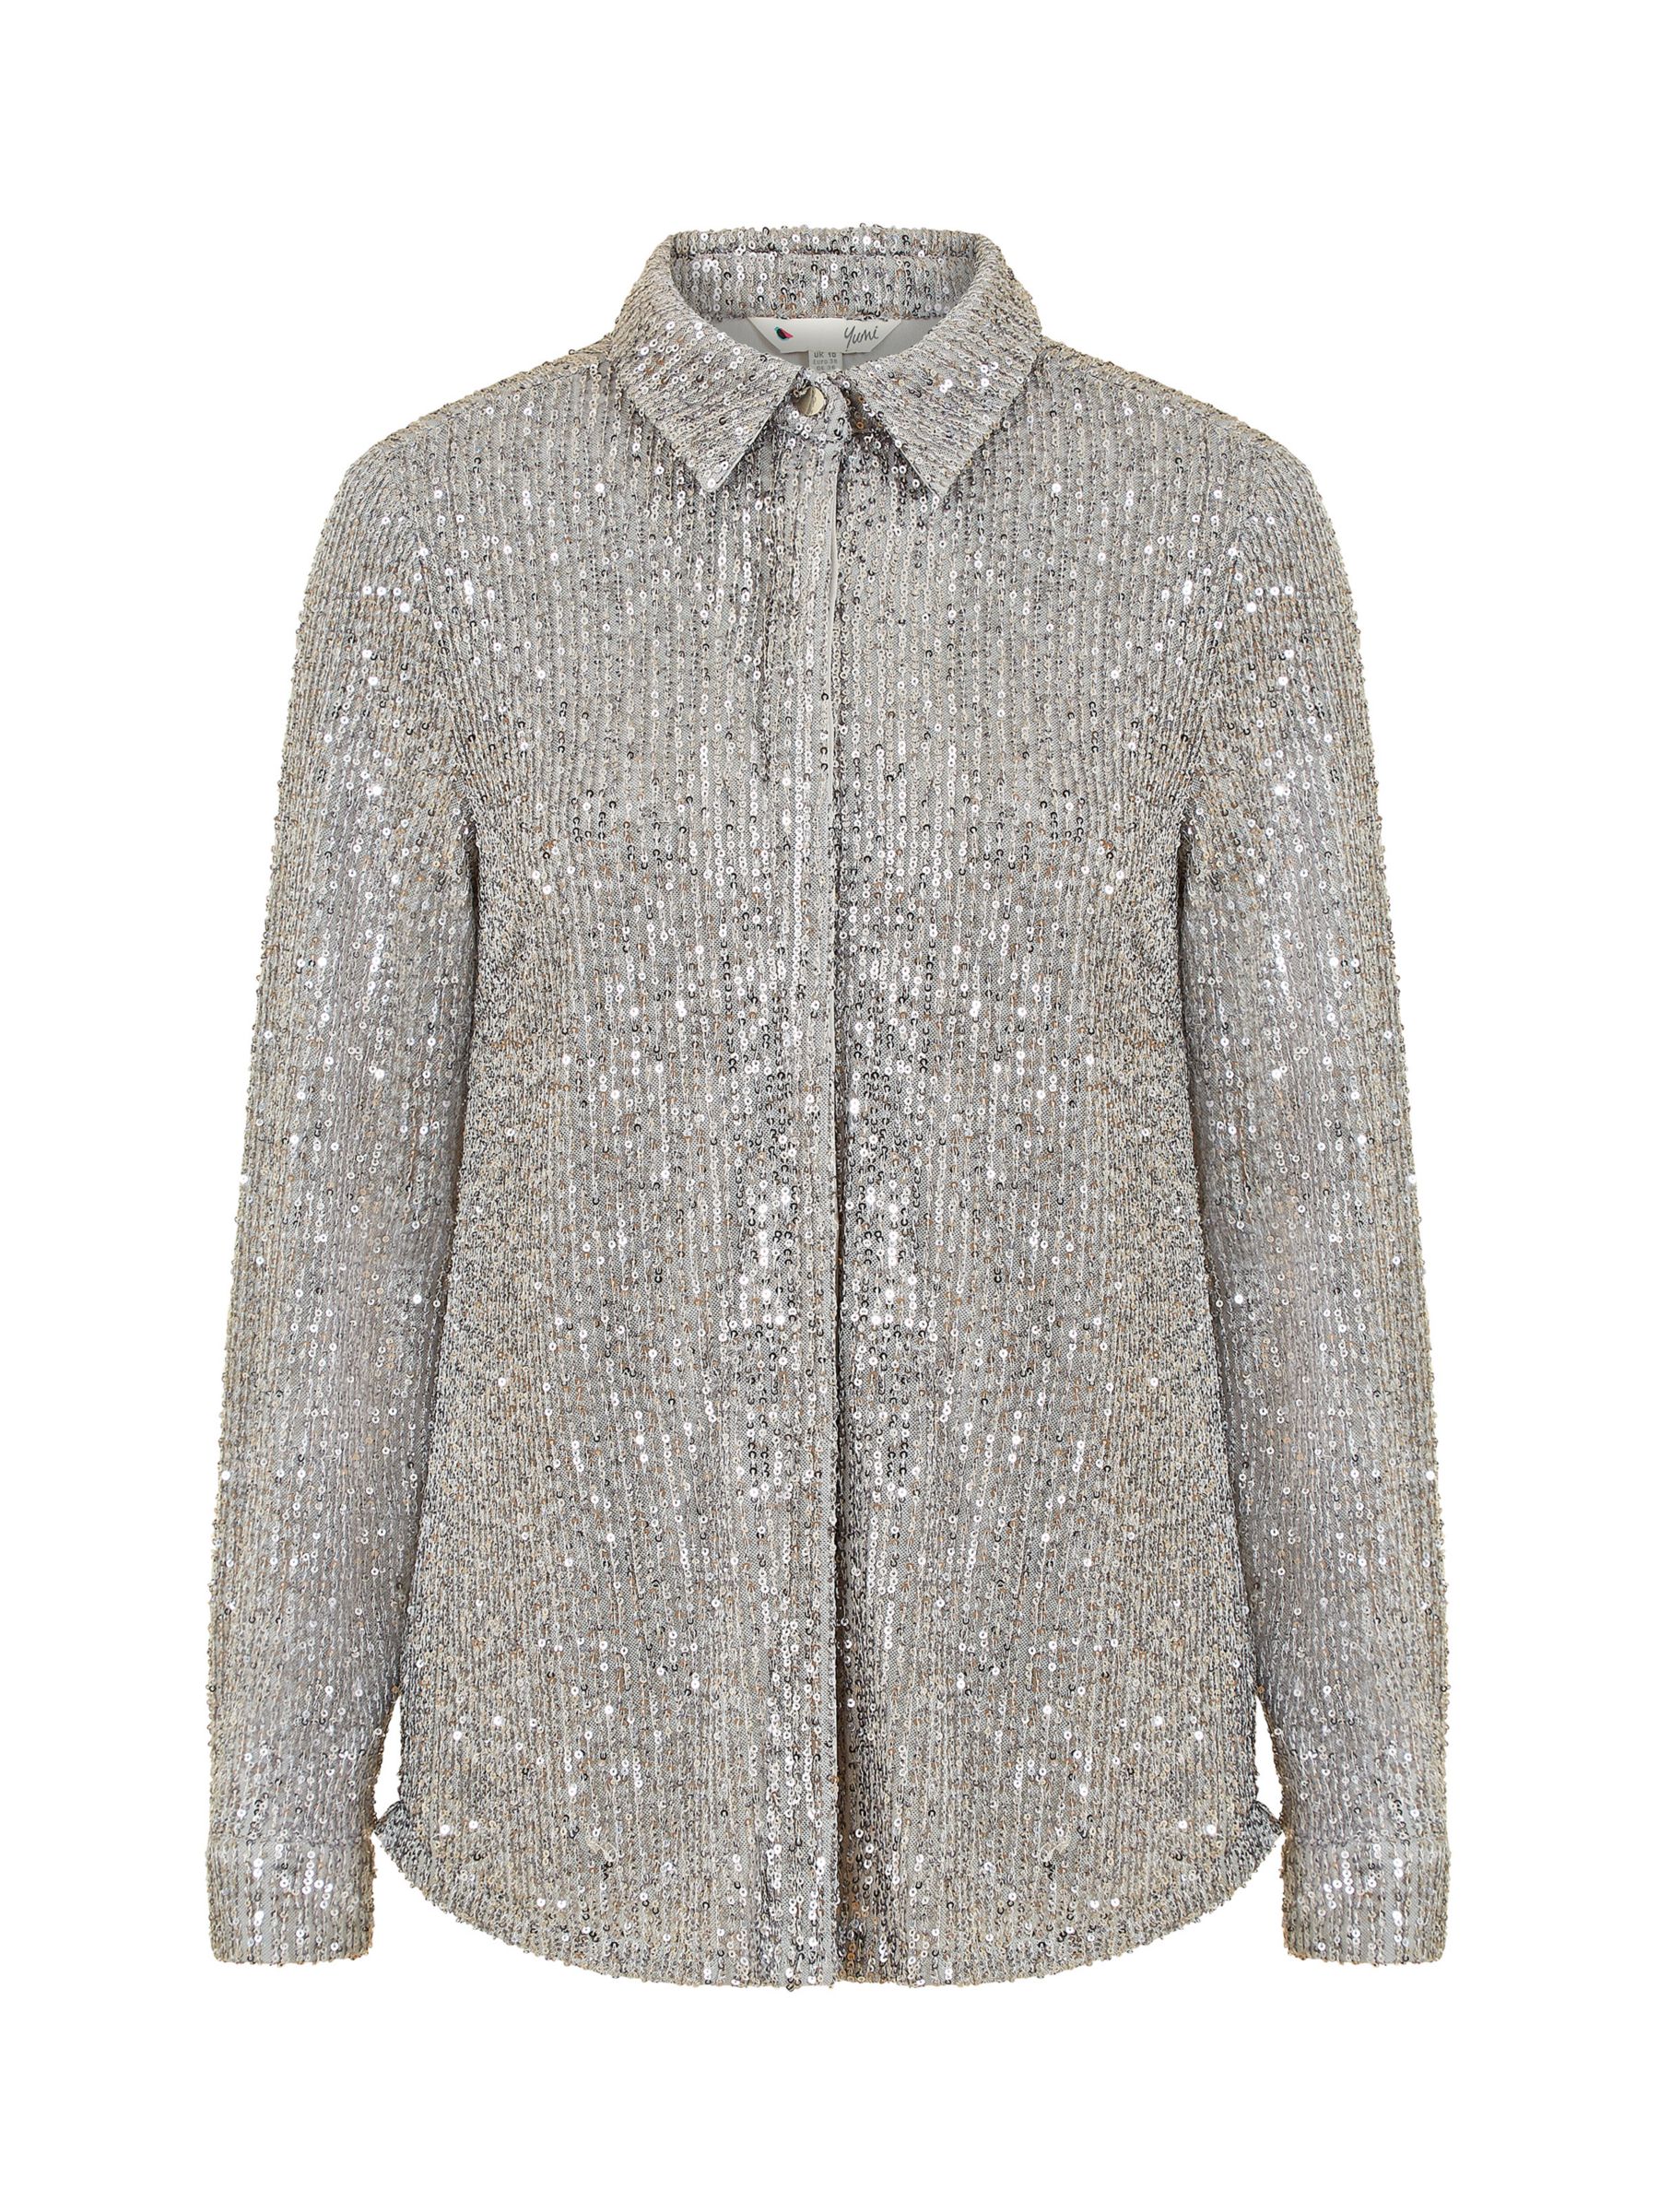 Yumi Silver Sequin Shirt, Silver at John Lewis & Partners